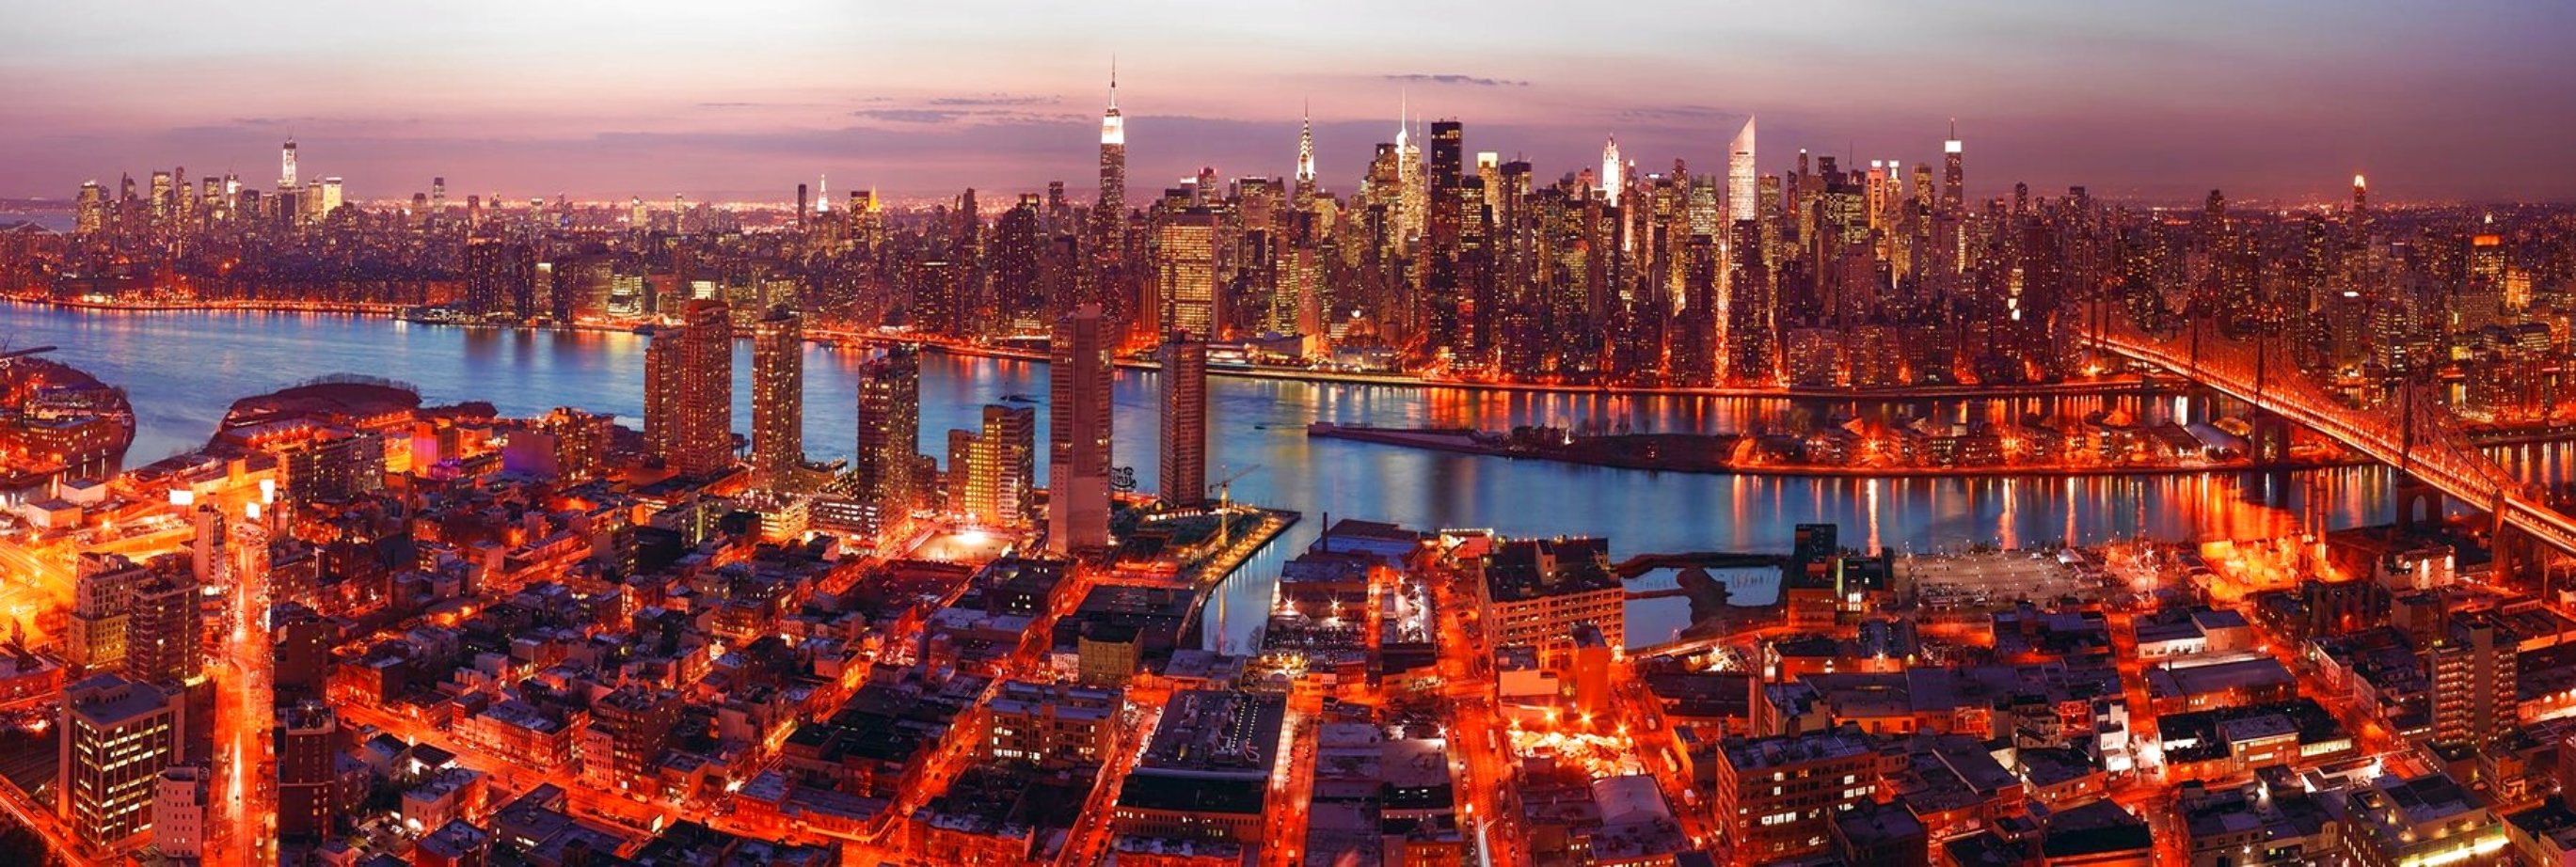 Heart of New York 2M Huge Panorama by Peter Lik